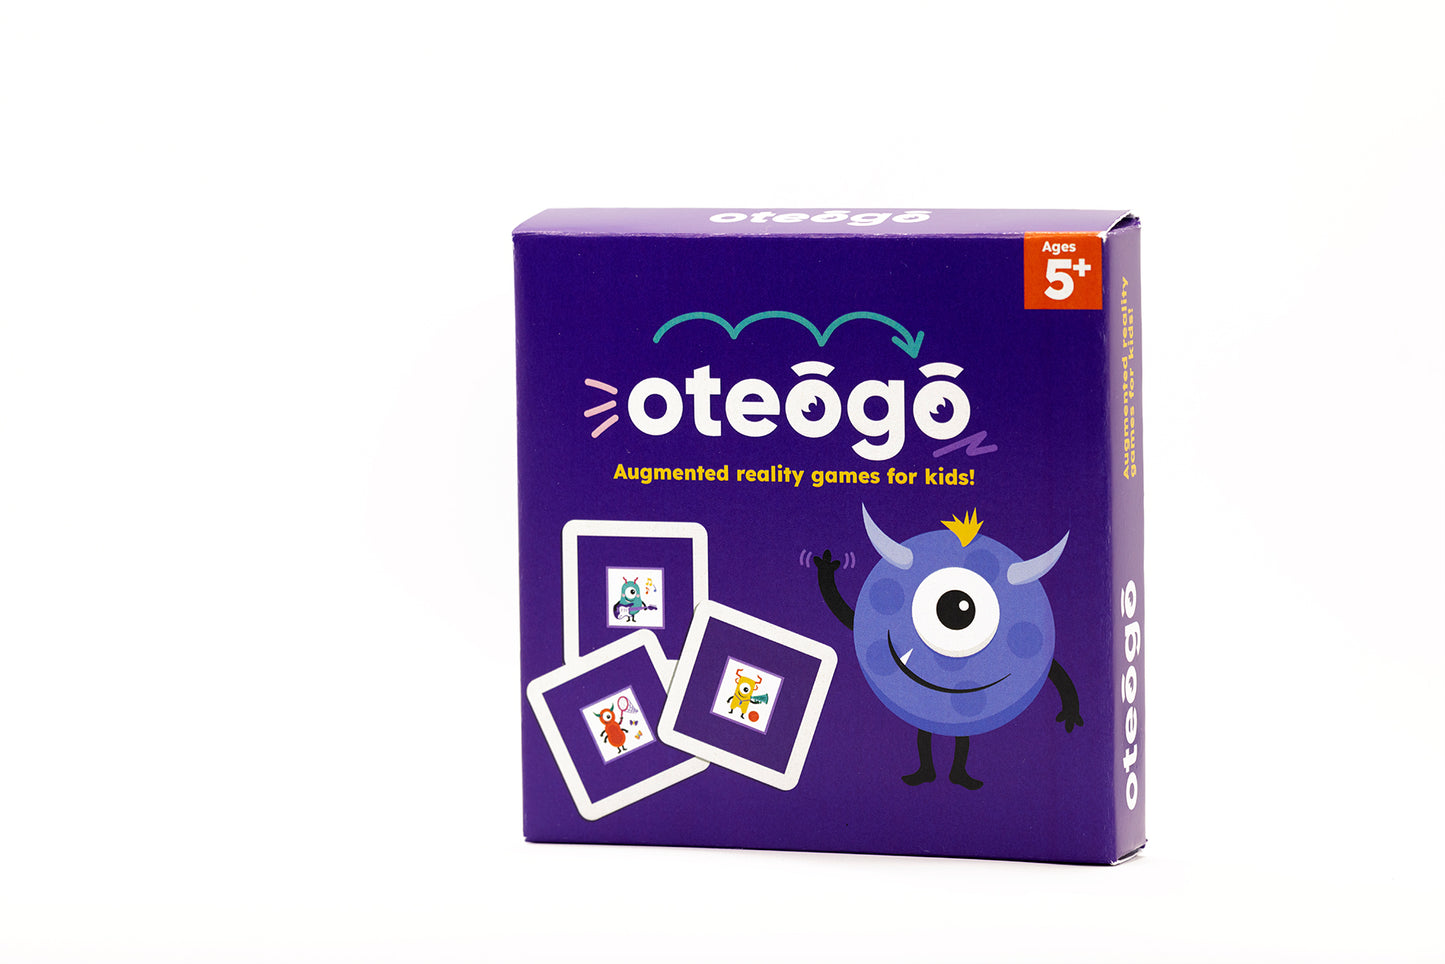 Oteogo Package